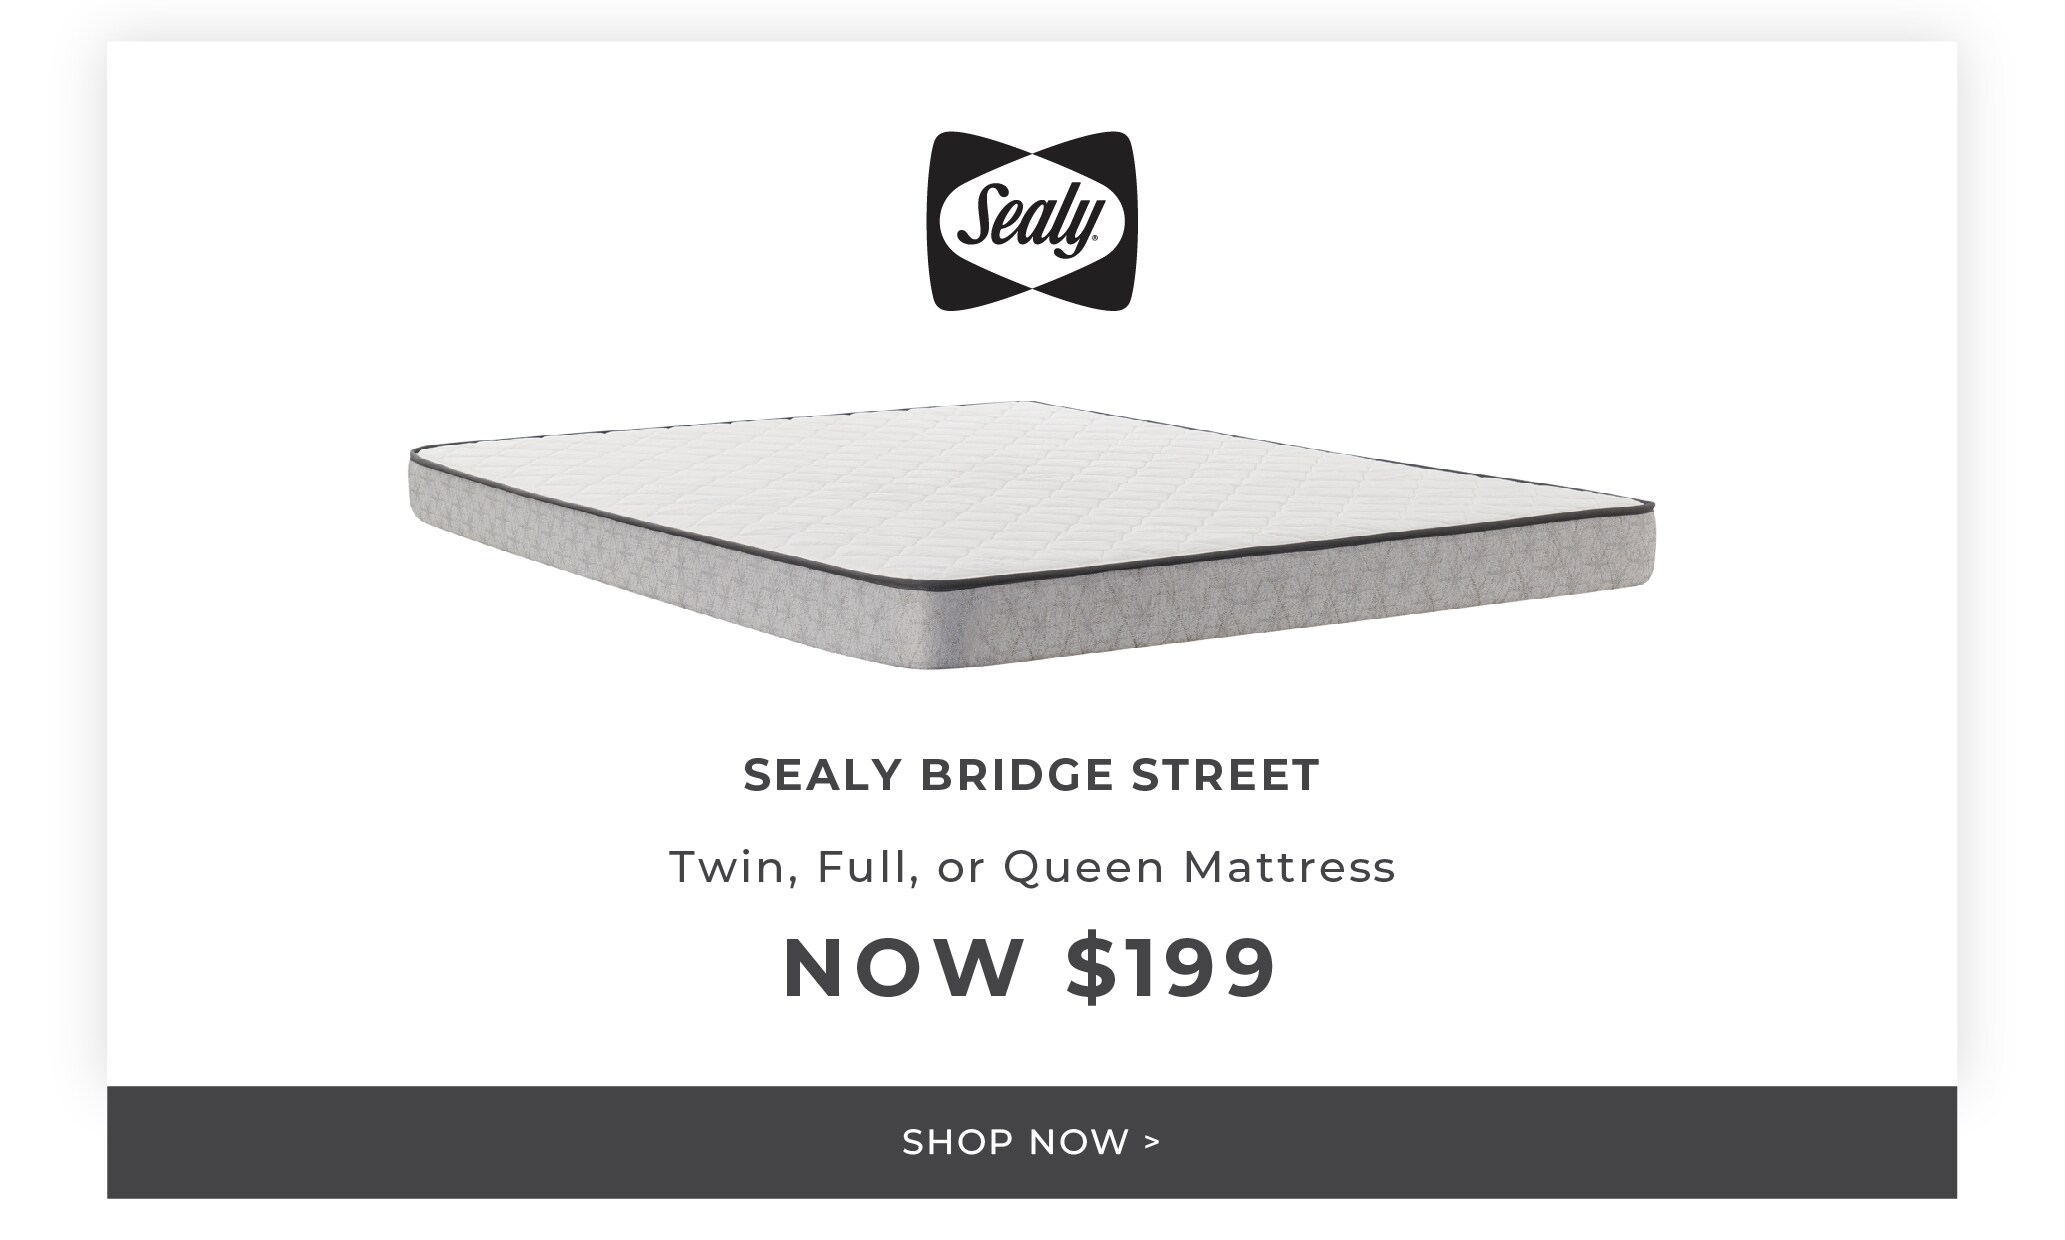 Shop the Sealy Bridge Street deals.